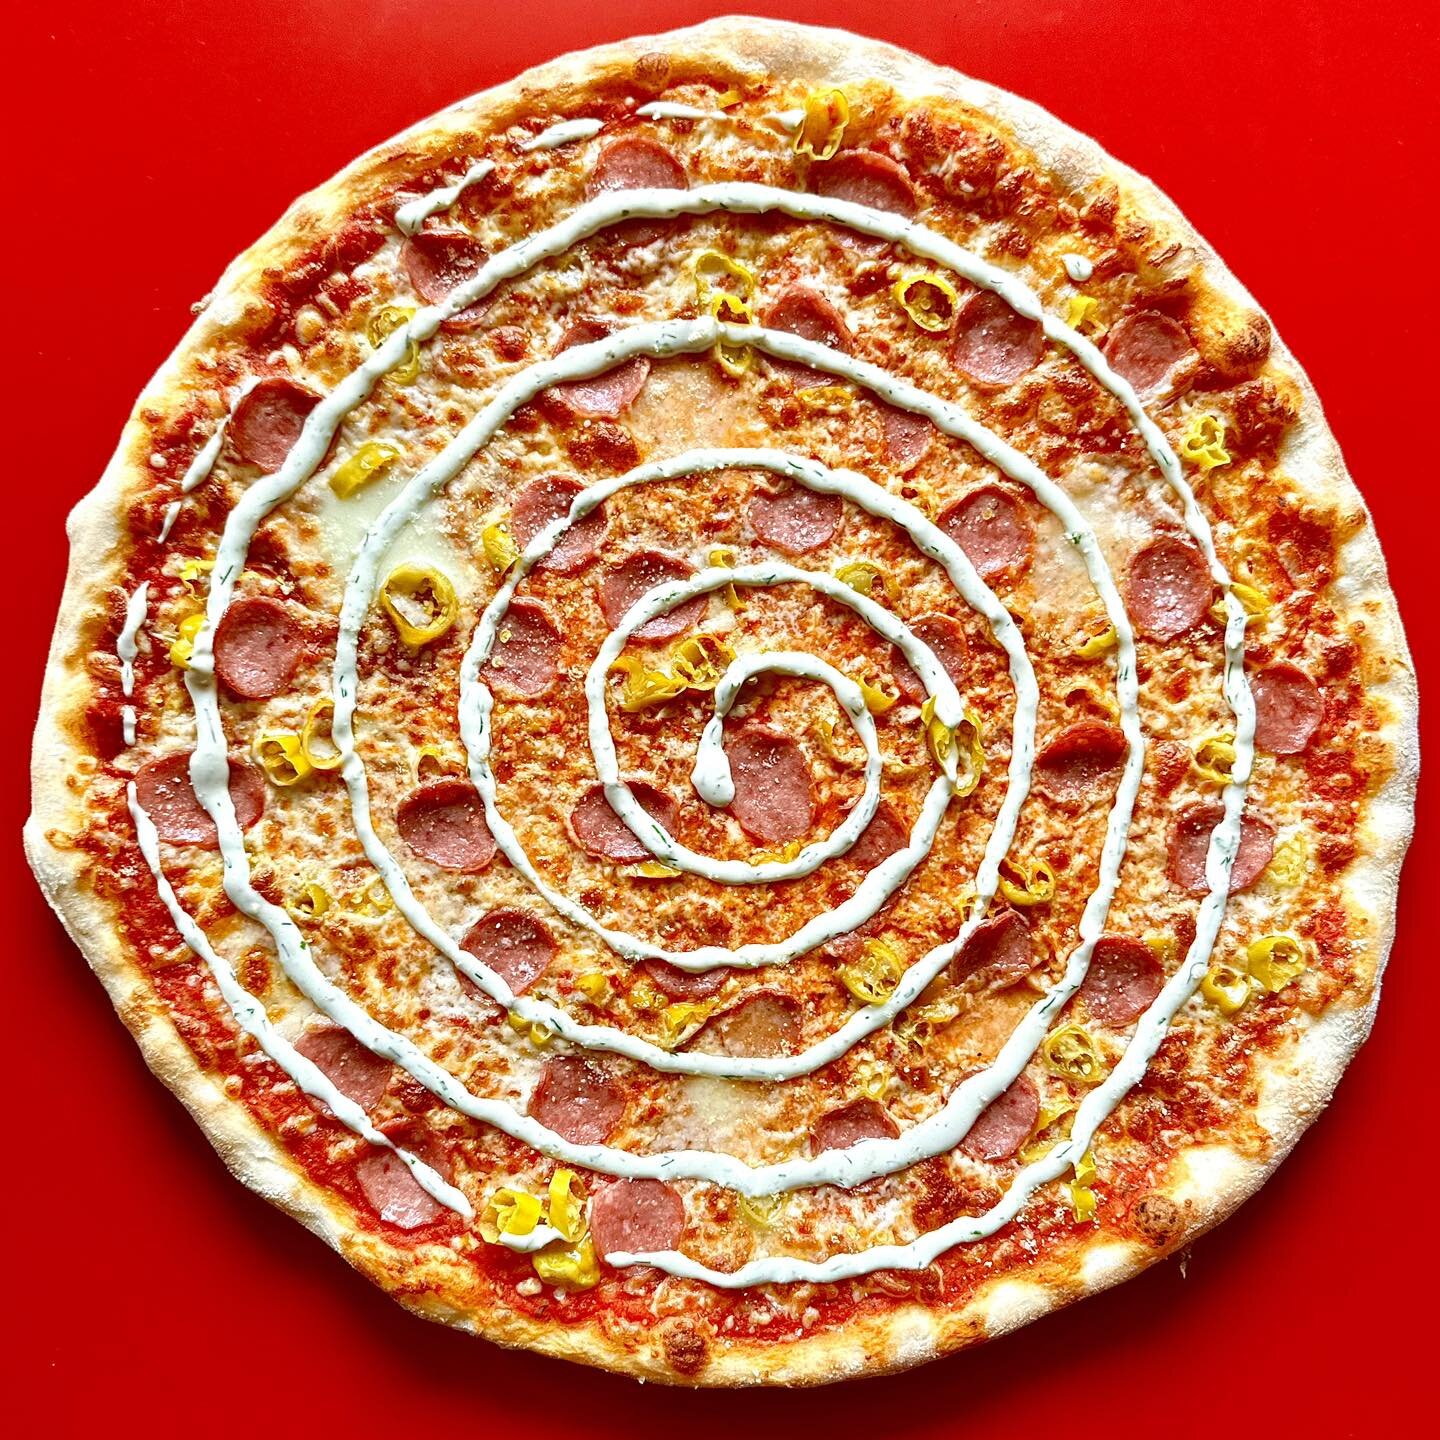 ⚡️ New Feature ⚡️
&lsquo;Kubasa Nova&rsquo;: Marinara, Fior Di Latte, Shredded Mozzarella, Tenderloin Meats Kubasa, Pepperoncini, Garlic Dill Swirl

Available at our Winnipeg location. 
.
.
.
.
.
#winnipeg #pizza #pizzadelivery #featurepizza #shortys